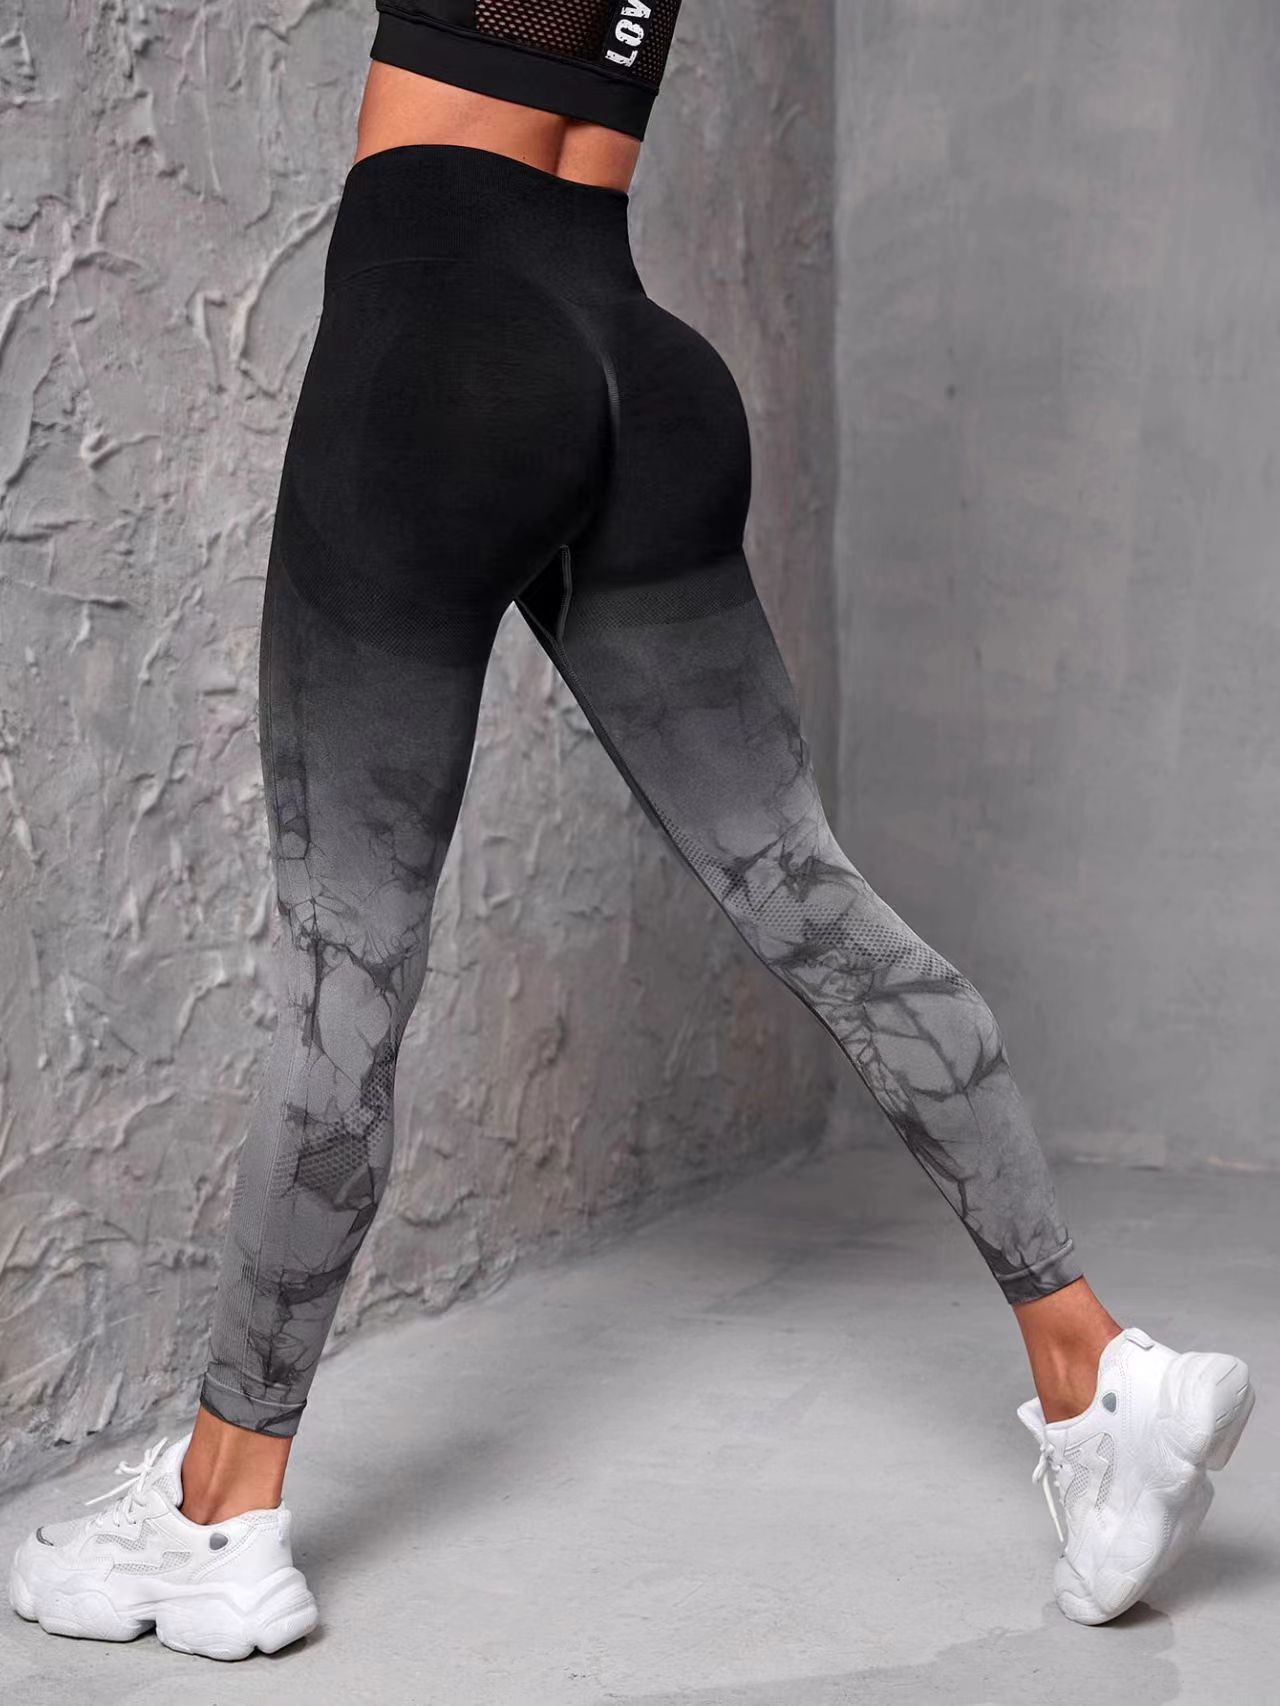 2023 Spot Gradient Tie-Dye Seamless Peach Yoga Pants Hip Yoga Clothes Tight High Waist Exercise Workout Pants